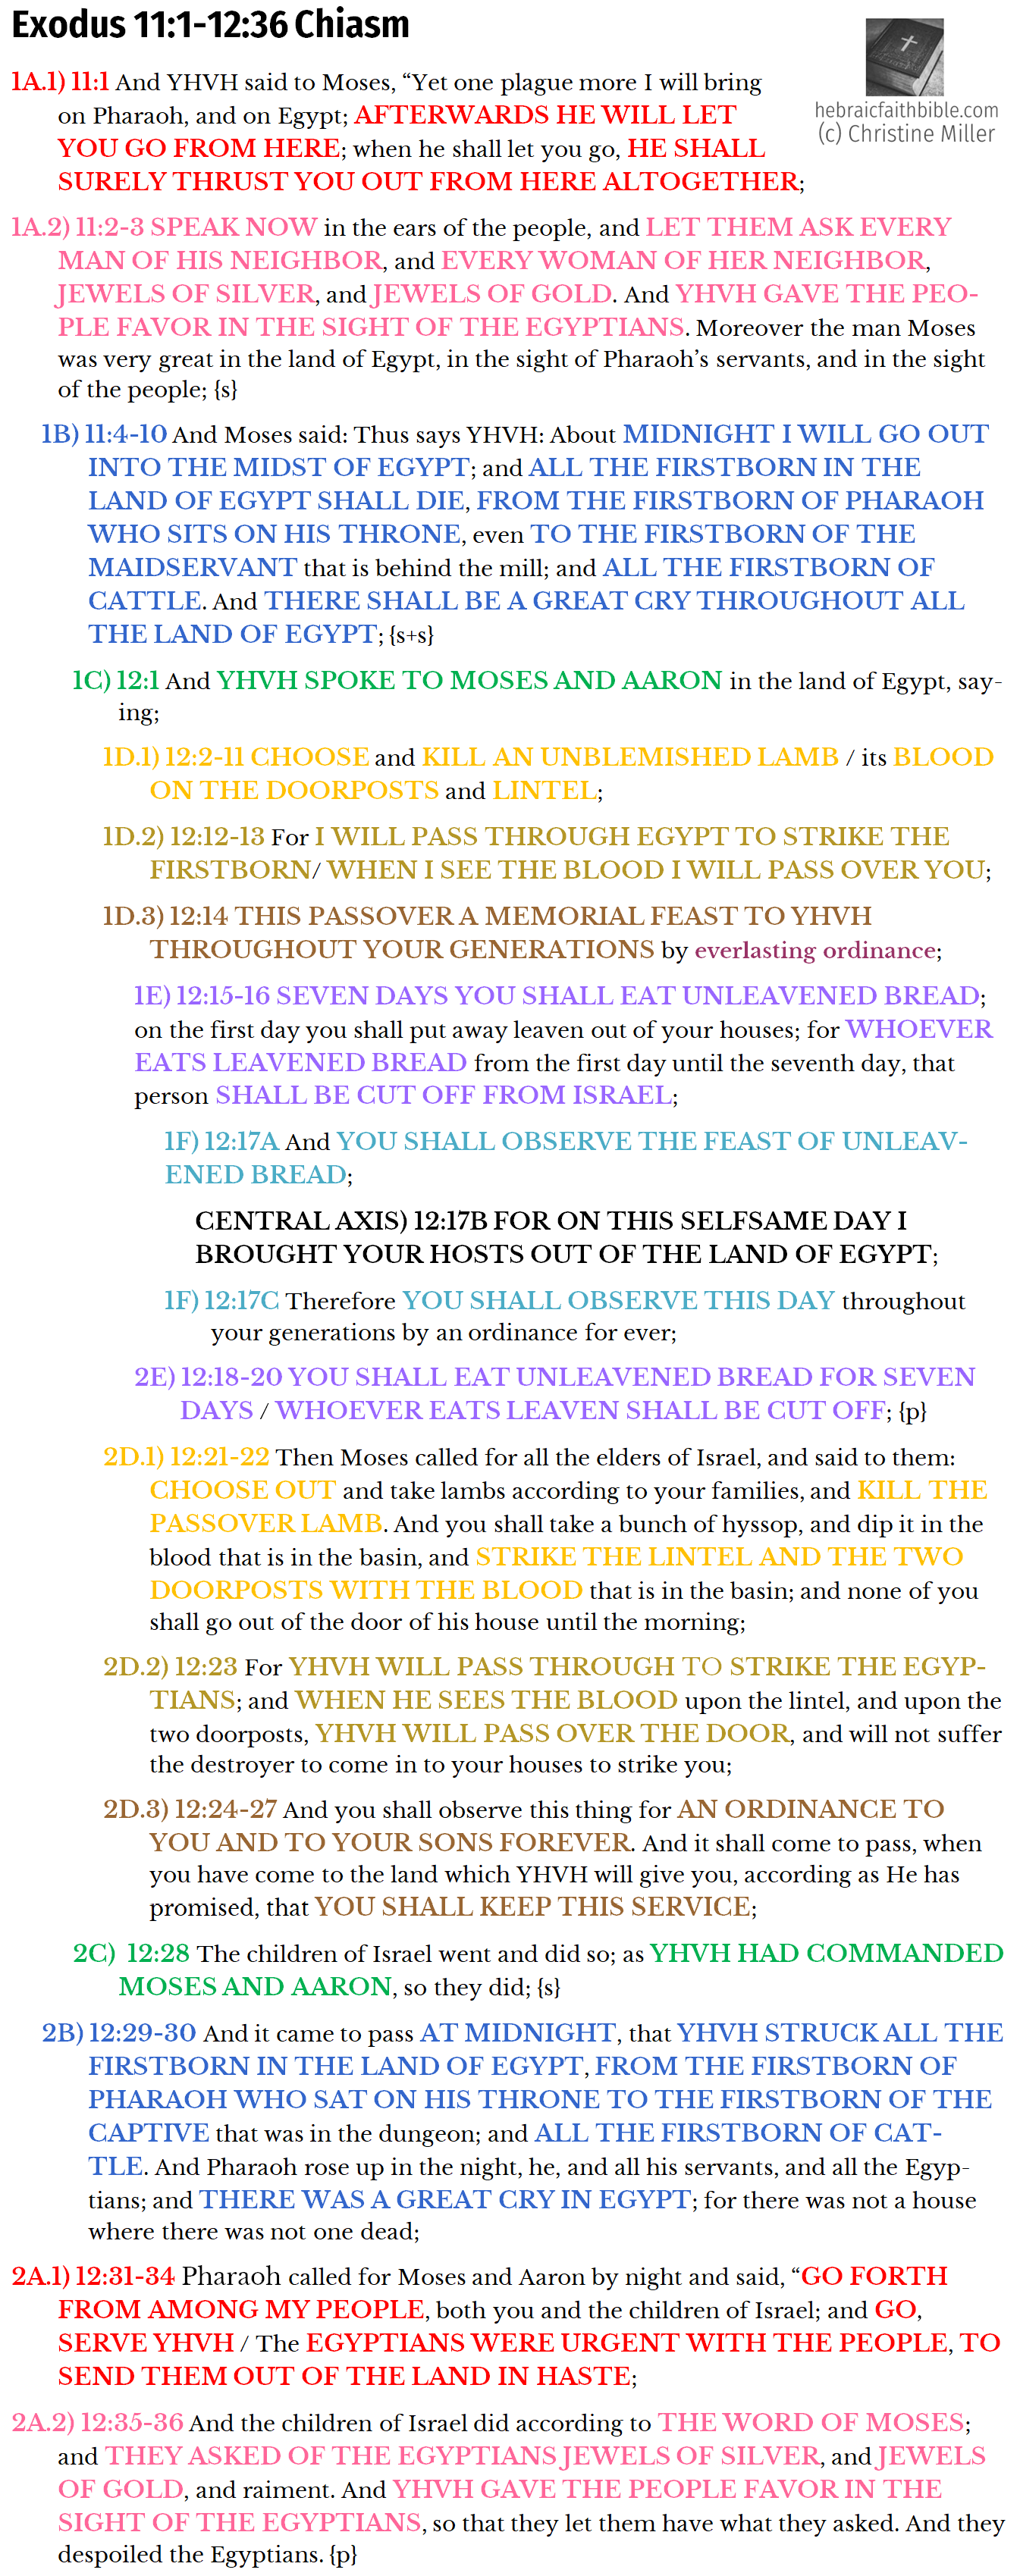 Exo 11:1-12:36 Chiasm | hebraicfaithbible.com